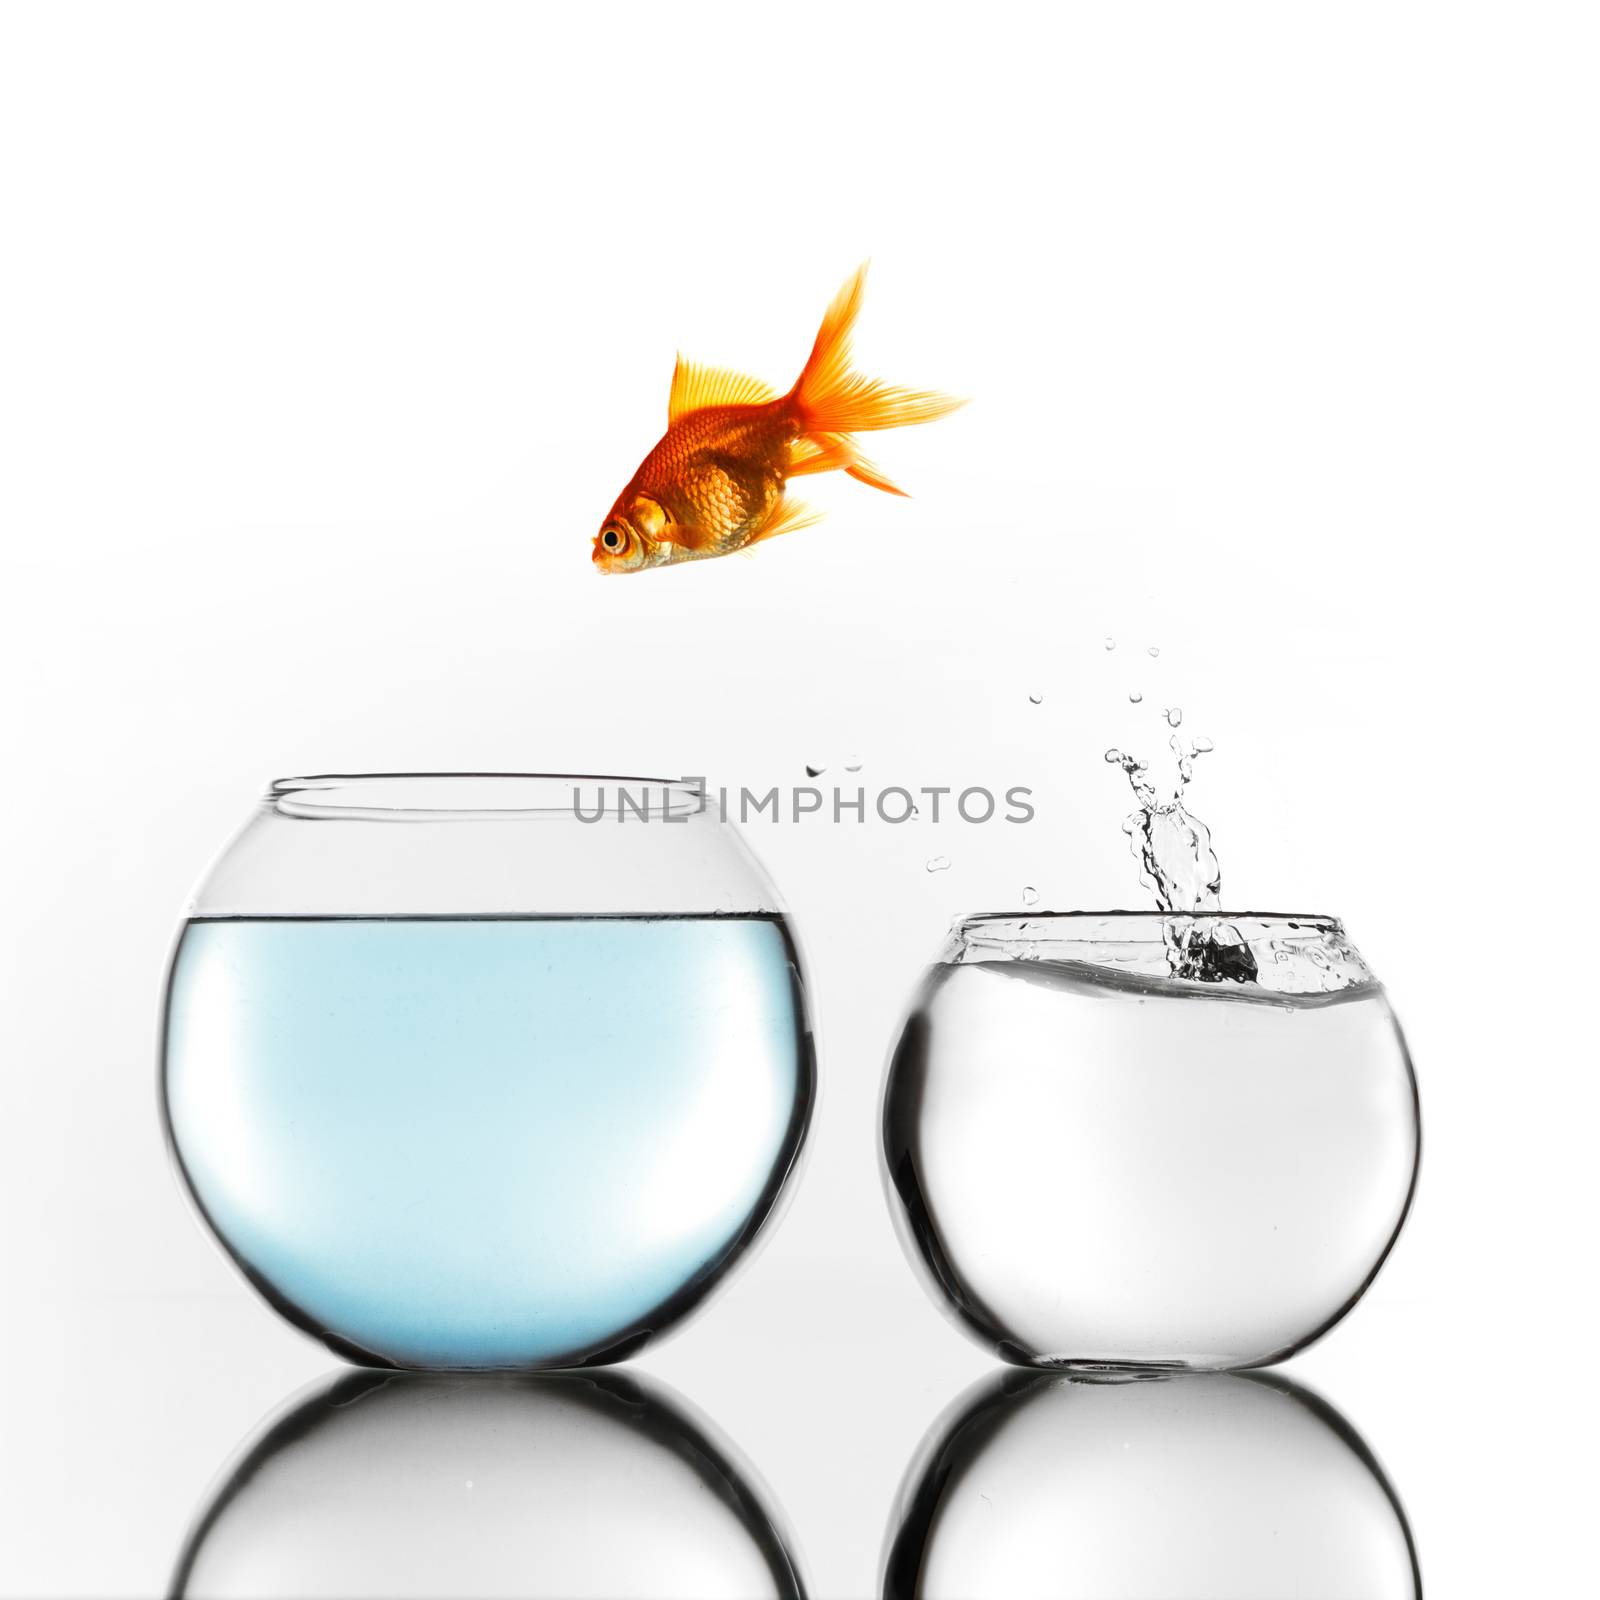 Gold fish jumping from smaller to bigger bowl